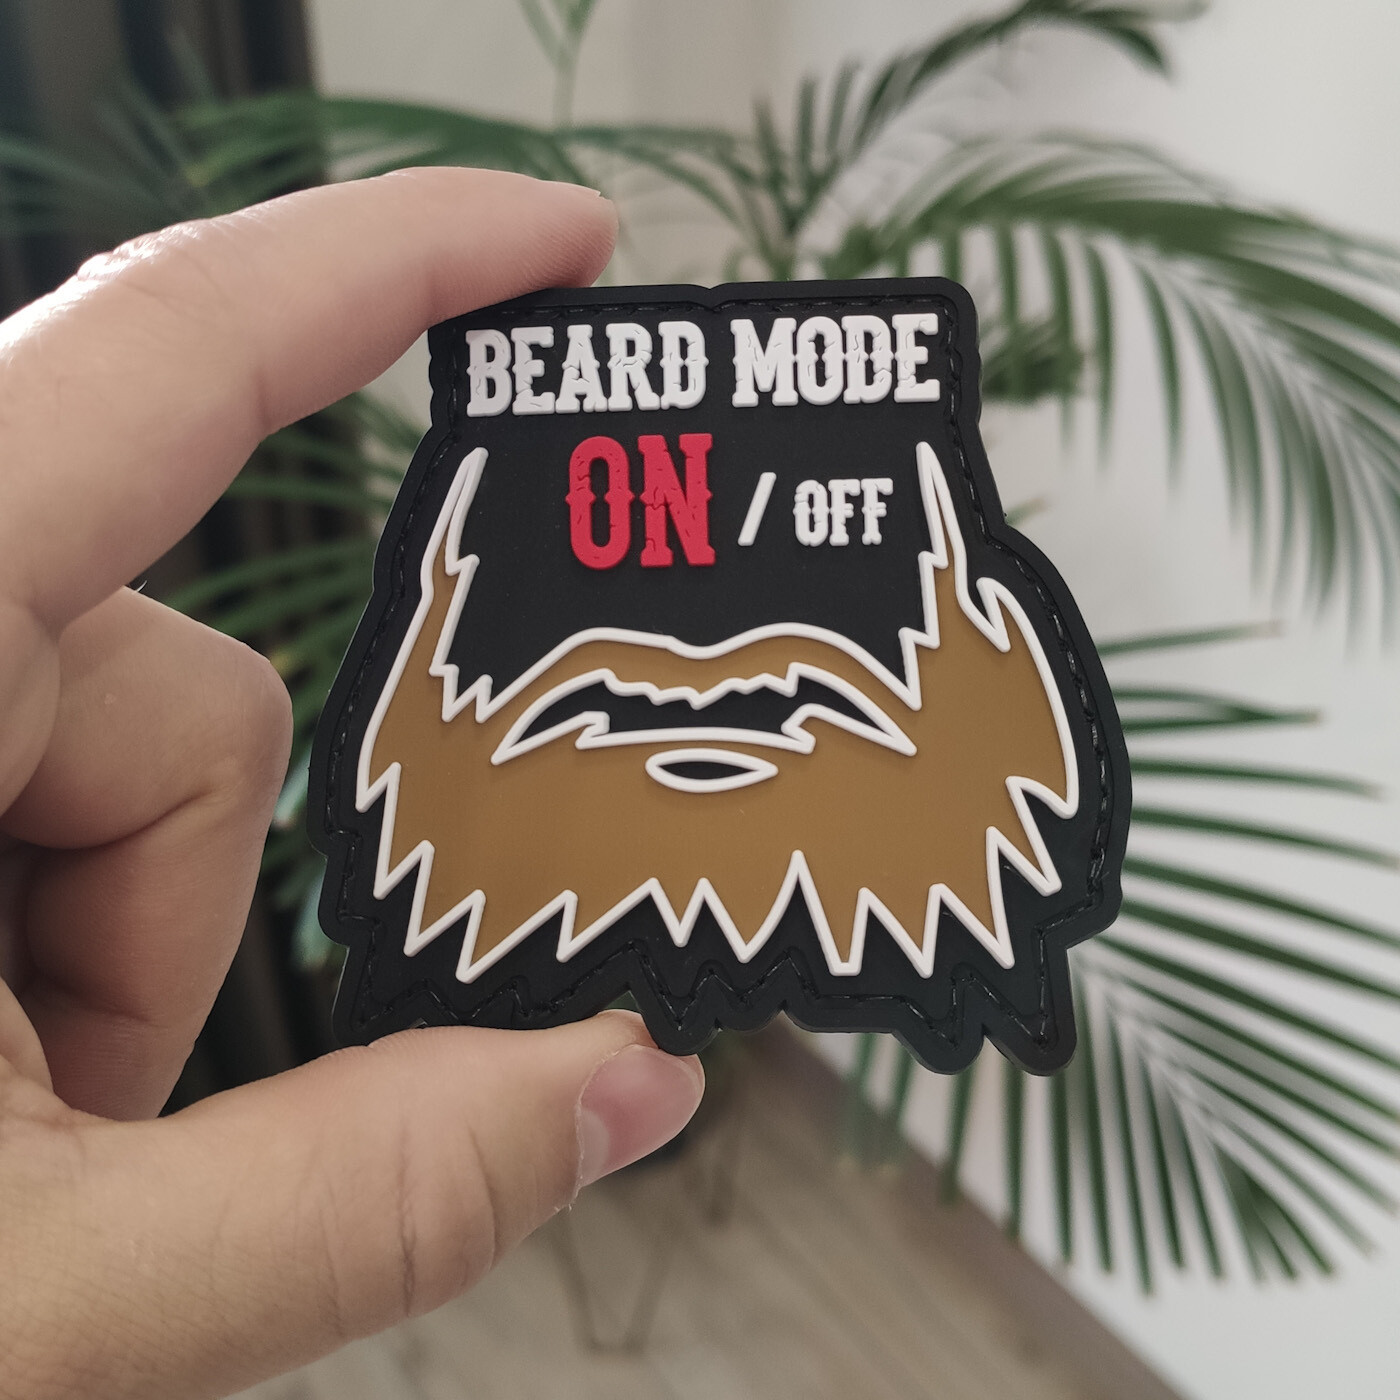 Beard mode